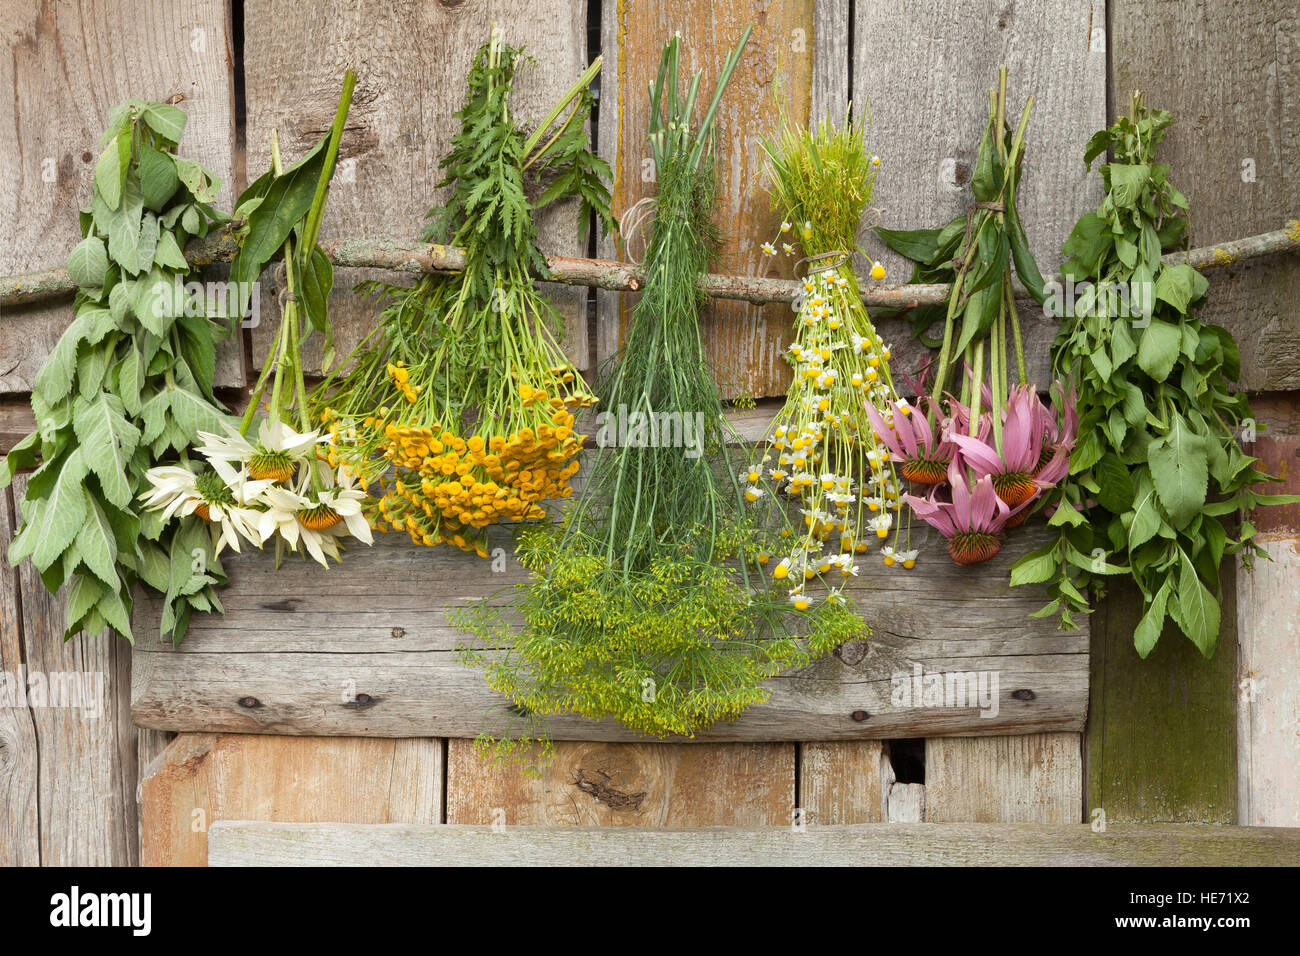 Drying medical herbs : echinacea,melissa,chamomile,dill and tutsan. Stock Photo